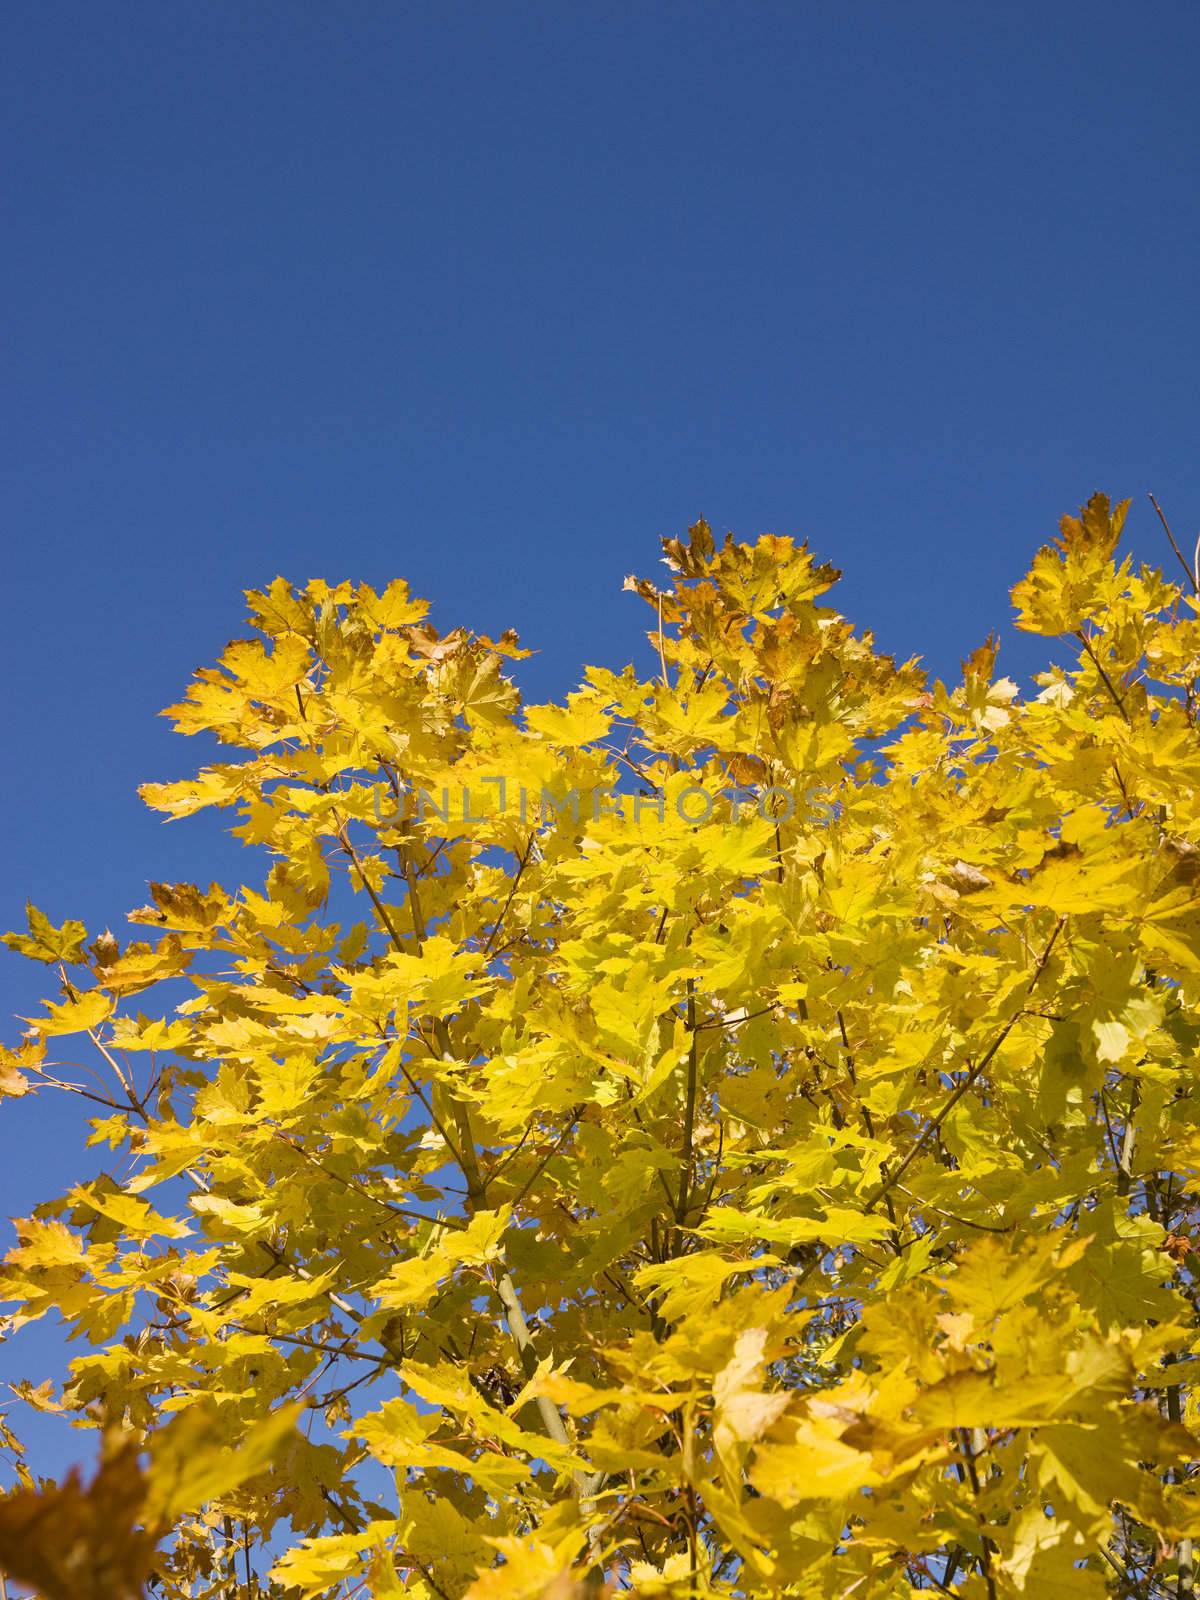 Yellow autumn leafs against a blue clear sky